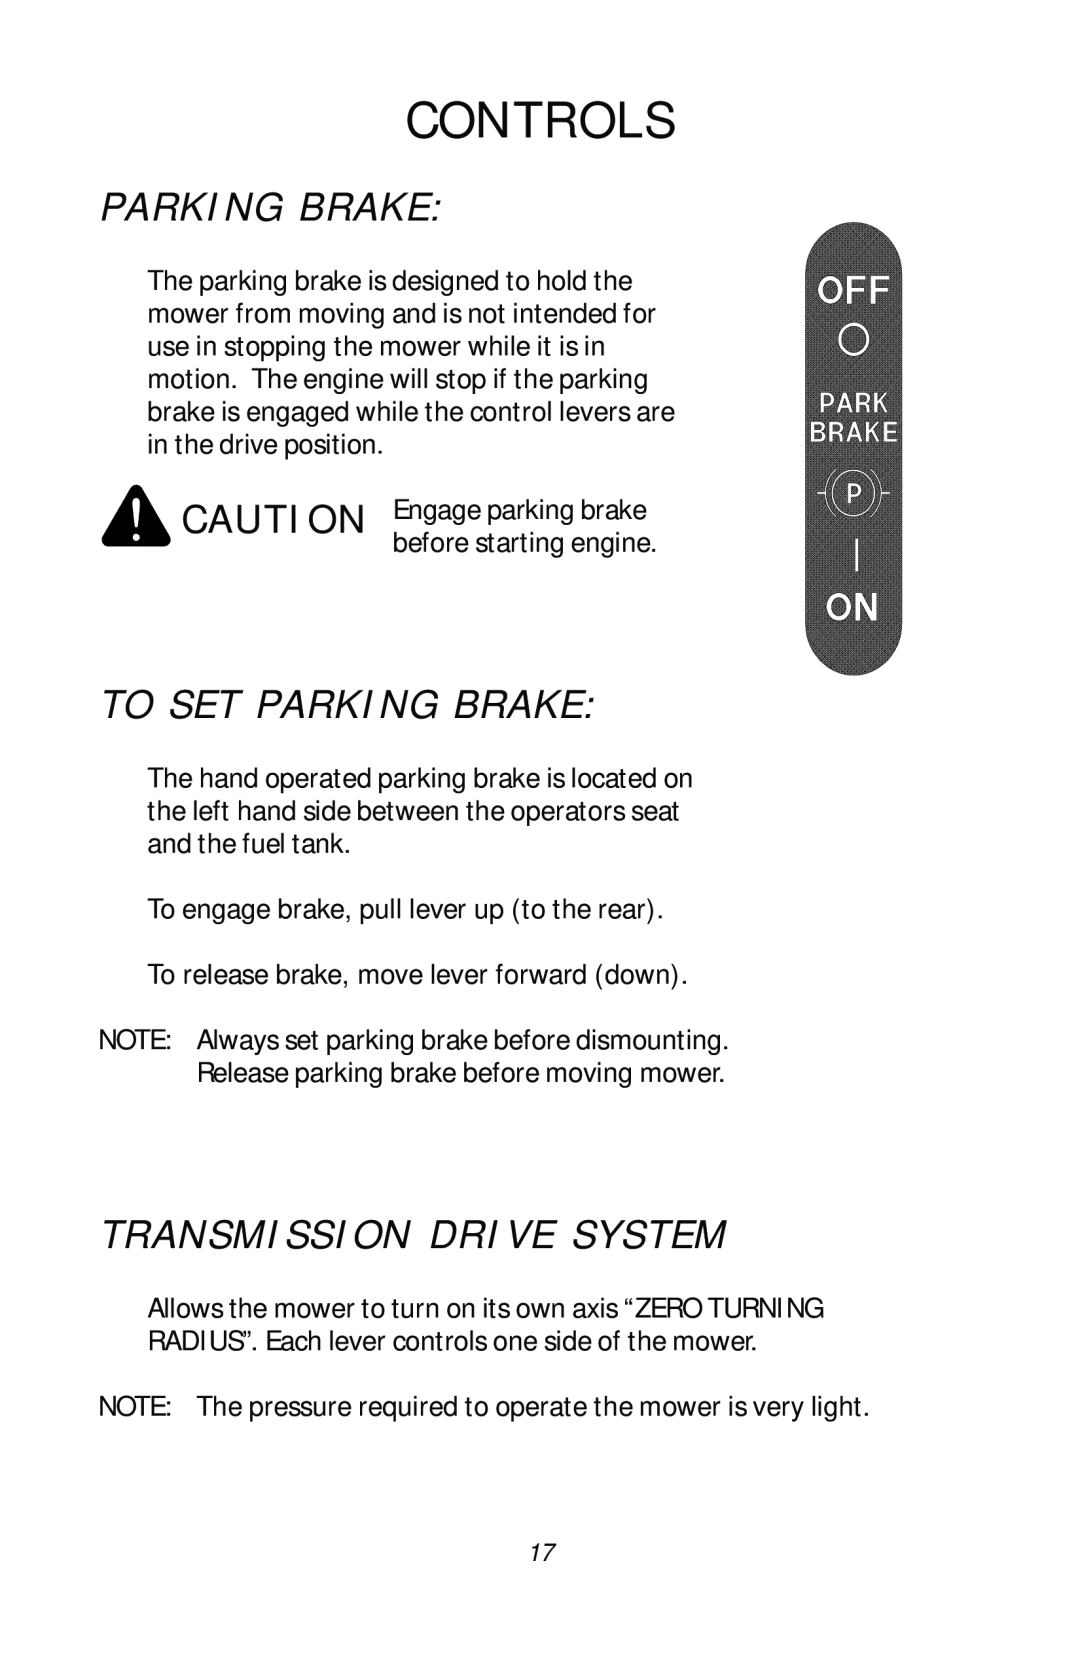 Dixon 17411-1103, ZTR RAM 50 manual To Set Parking Brake, Transmission Drive System, Controls 